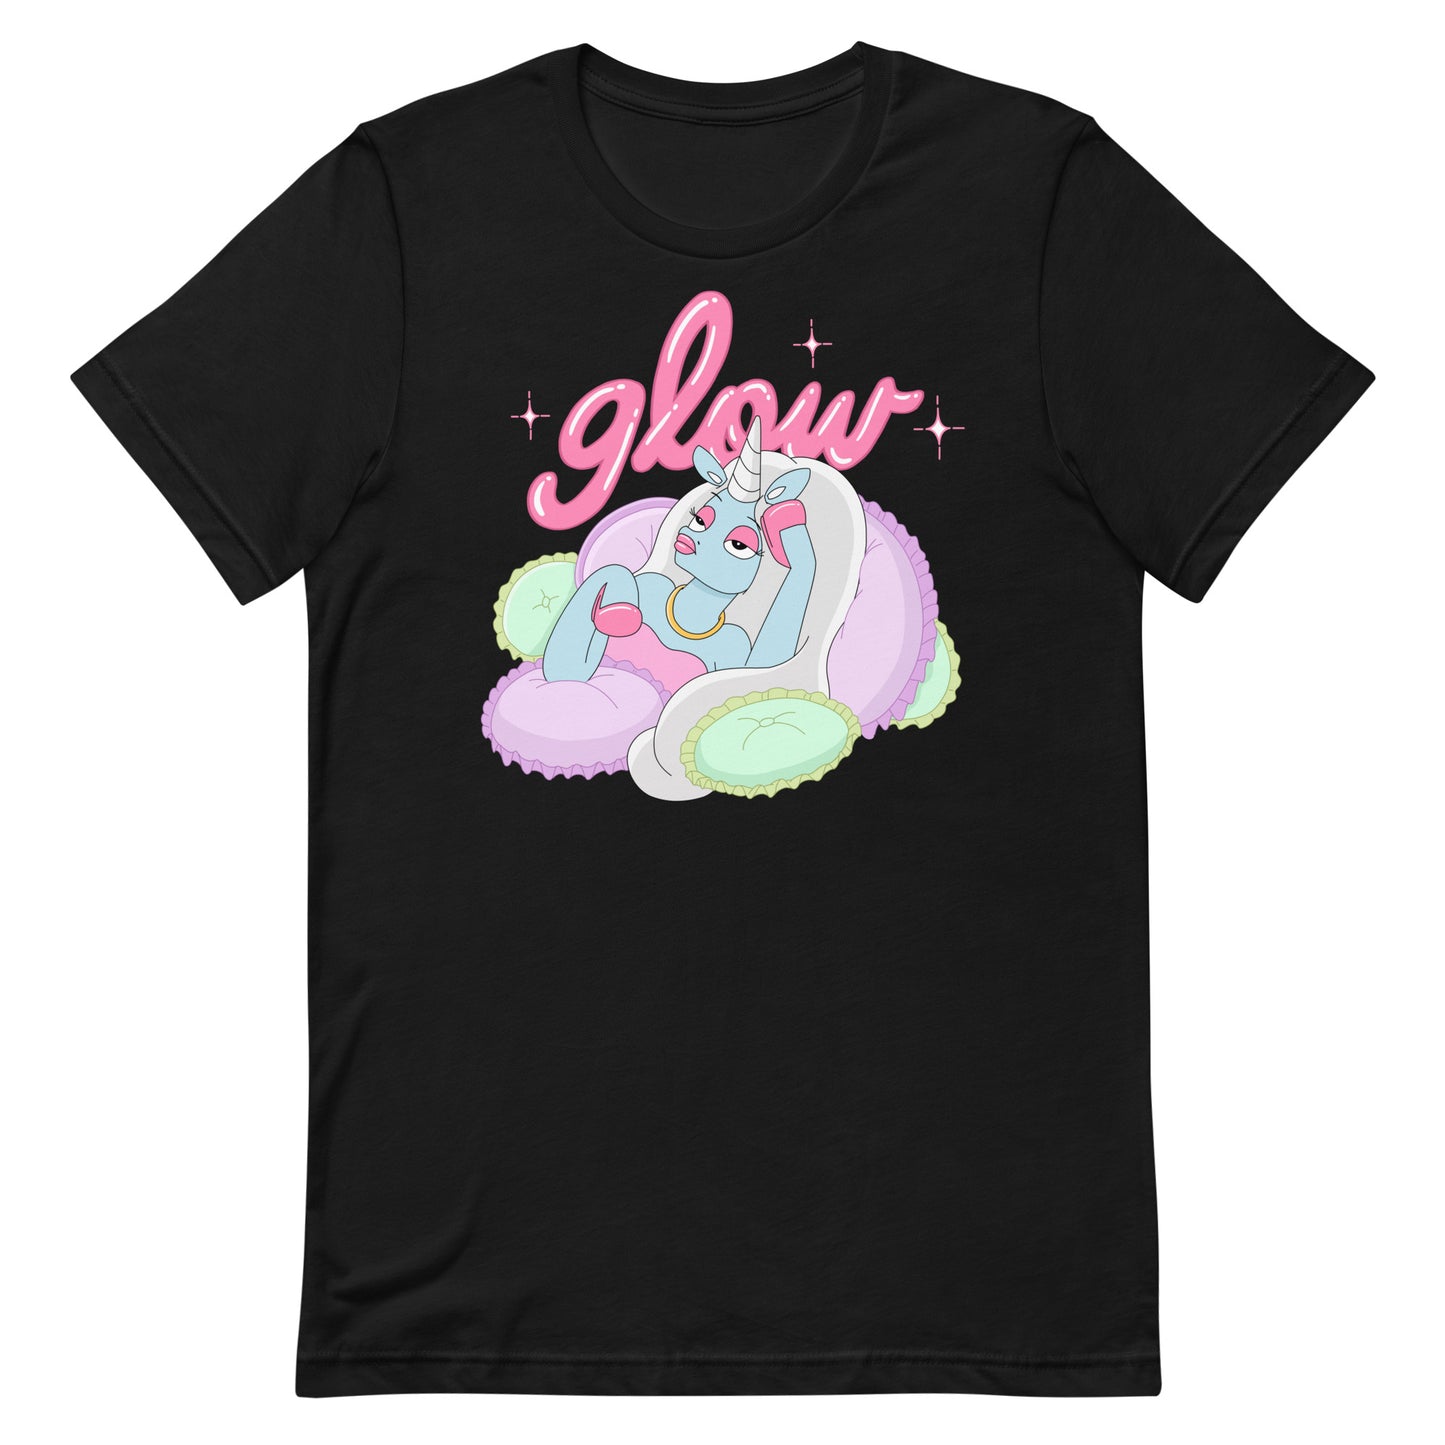 black unicorn tee shirt with glow the unicorn